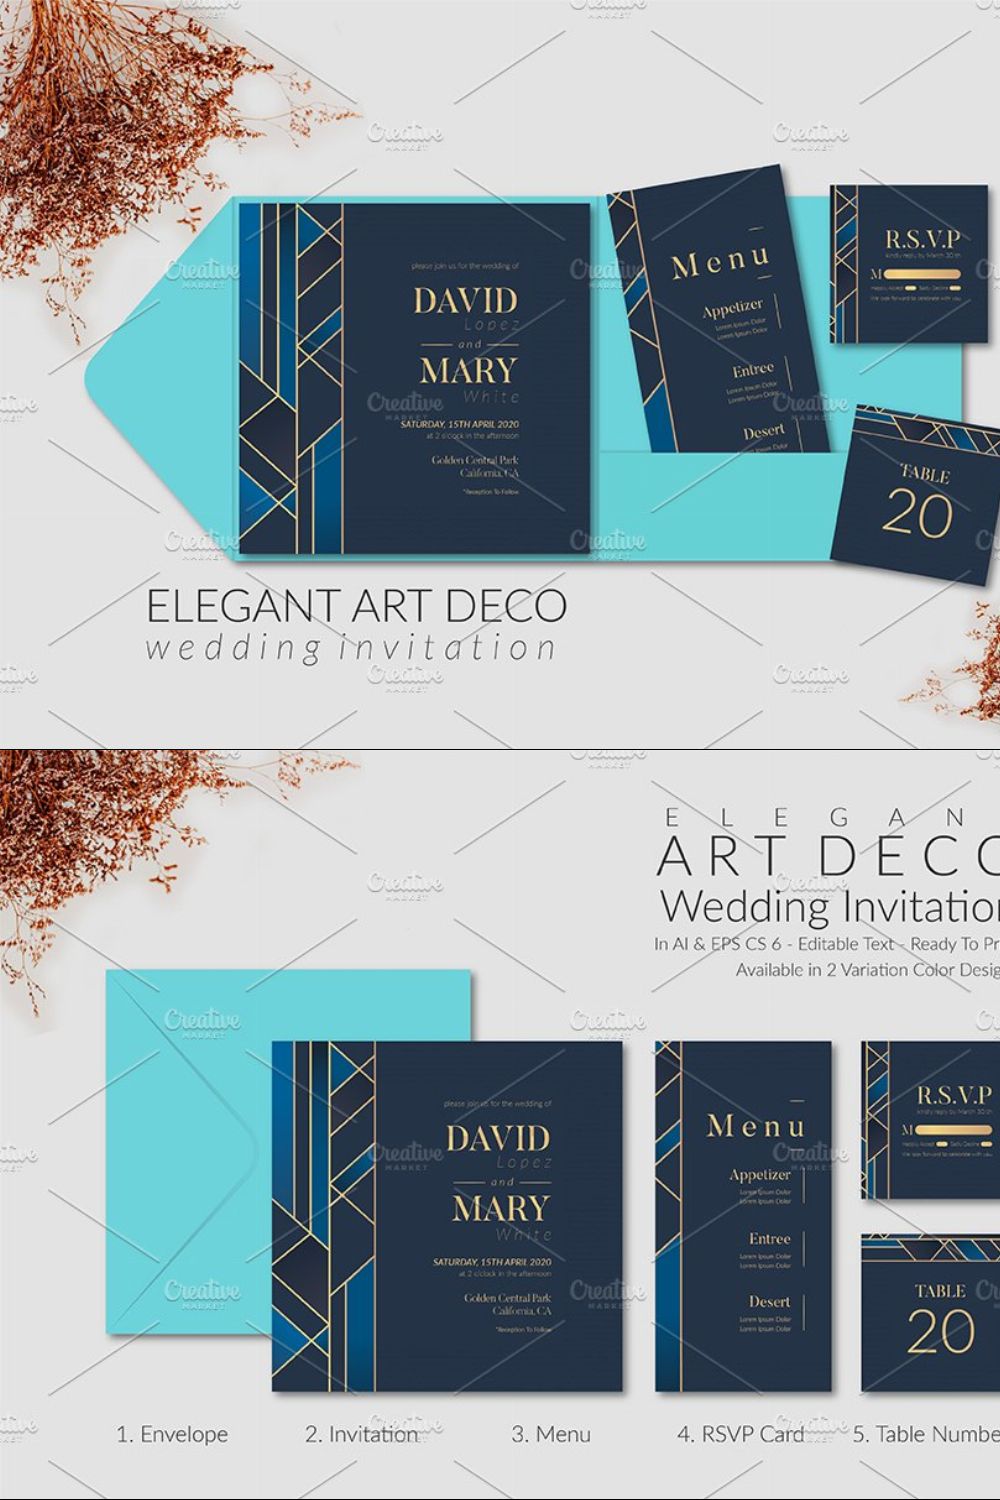 Elegant Art Deco Wedding Invitation pinterest preview image.